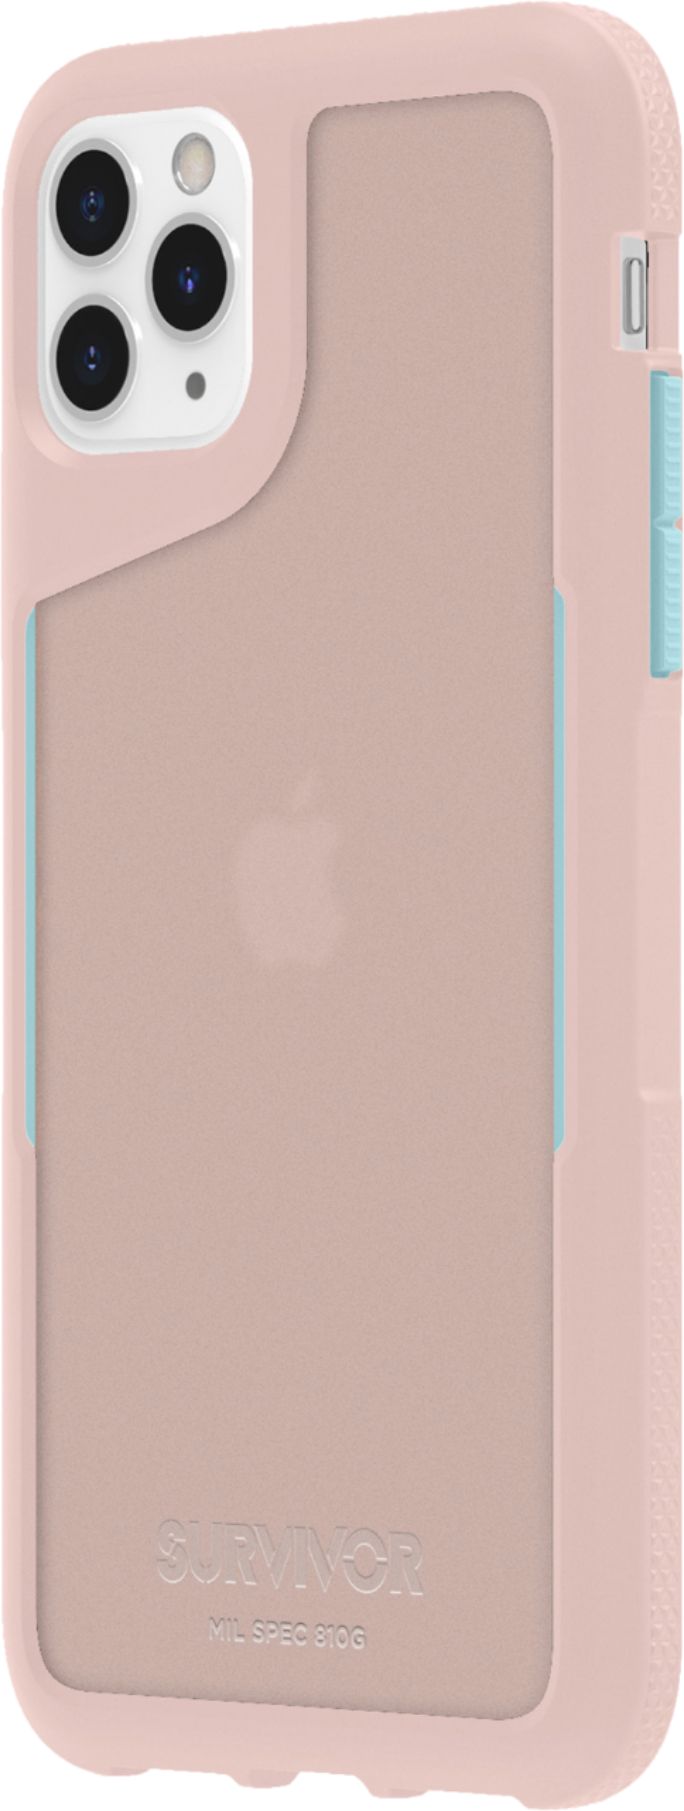 Left View: Griffin Technology - Survivor Endurance Case for Apple® iPhone® 11 Pro Max - Blue/Translucent/Pink